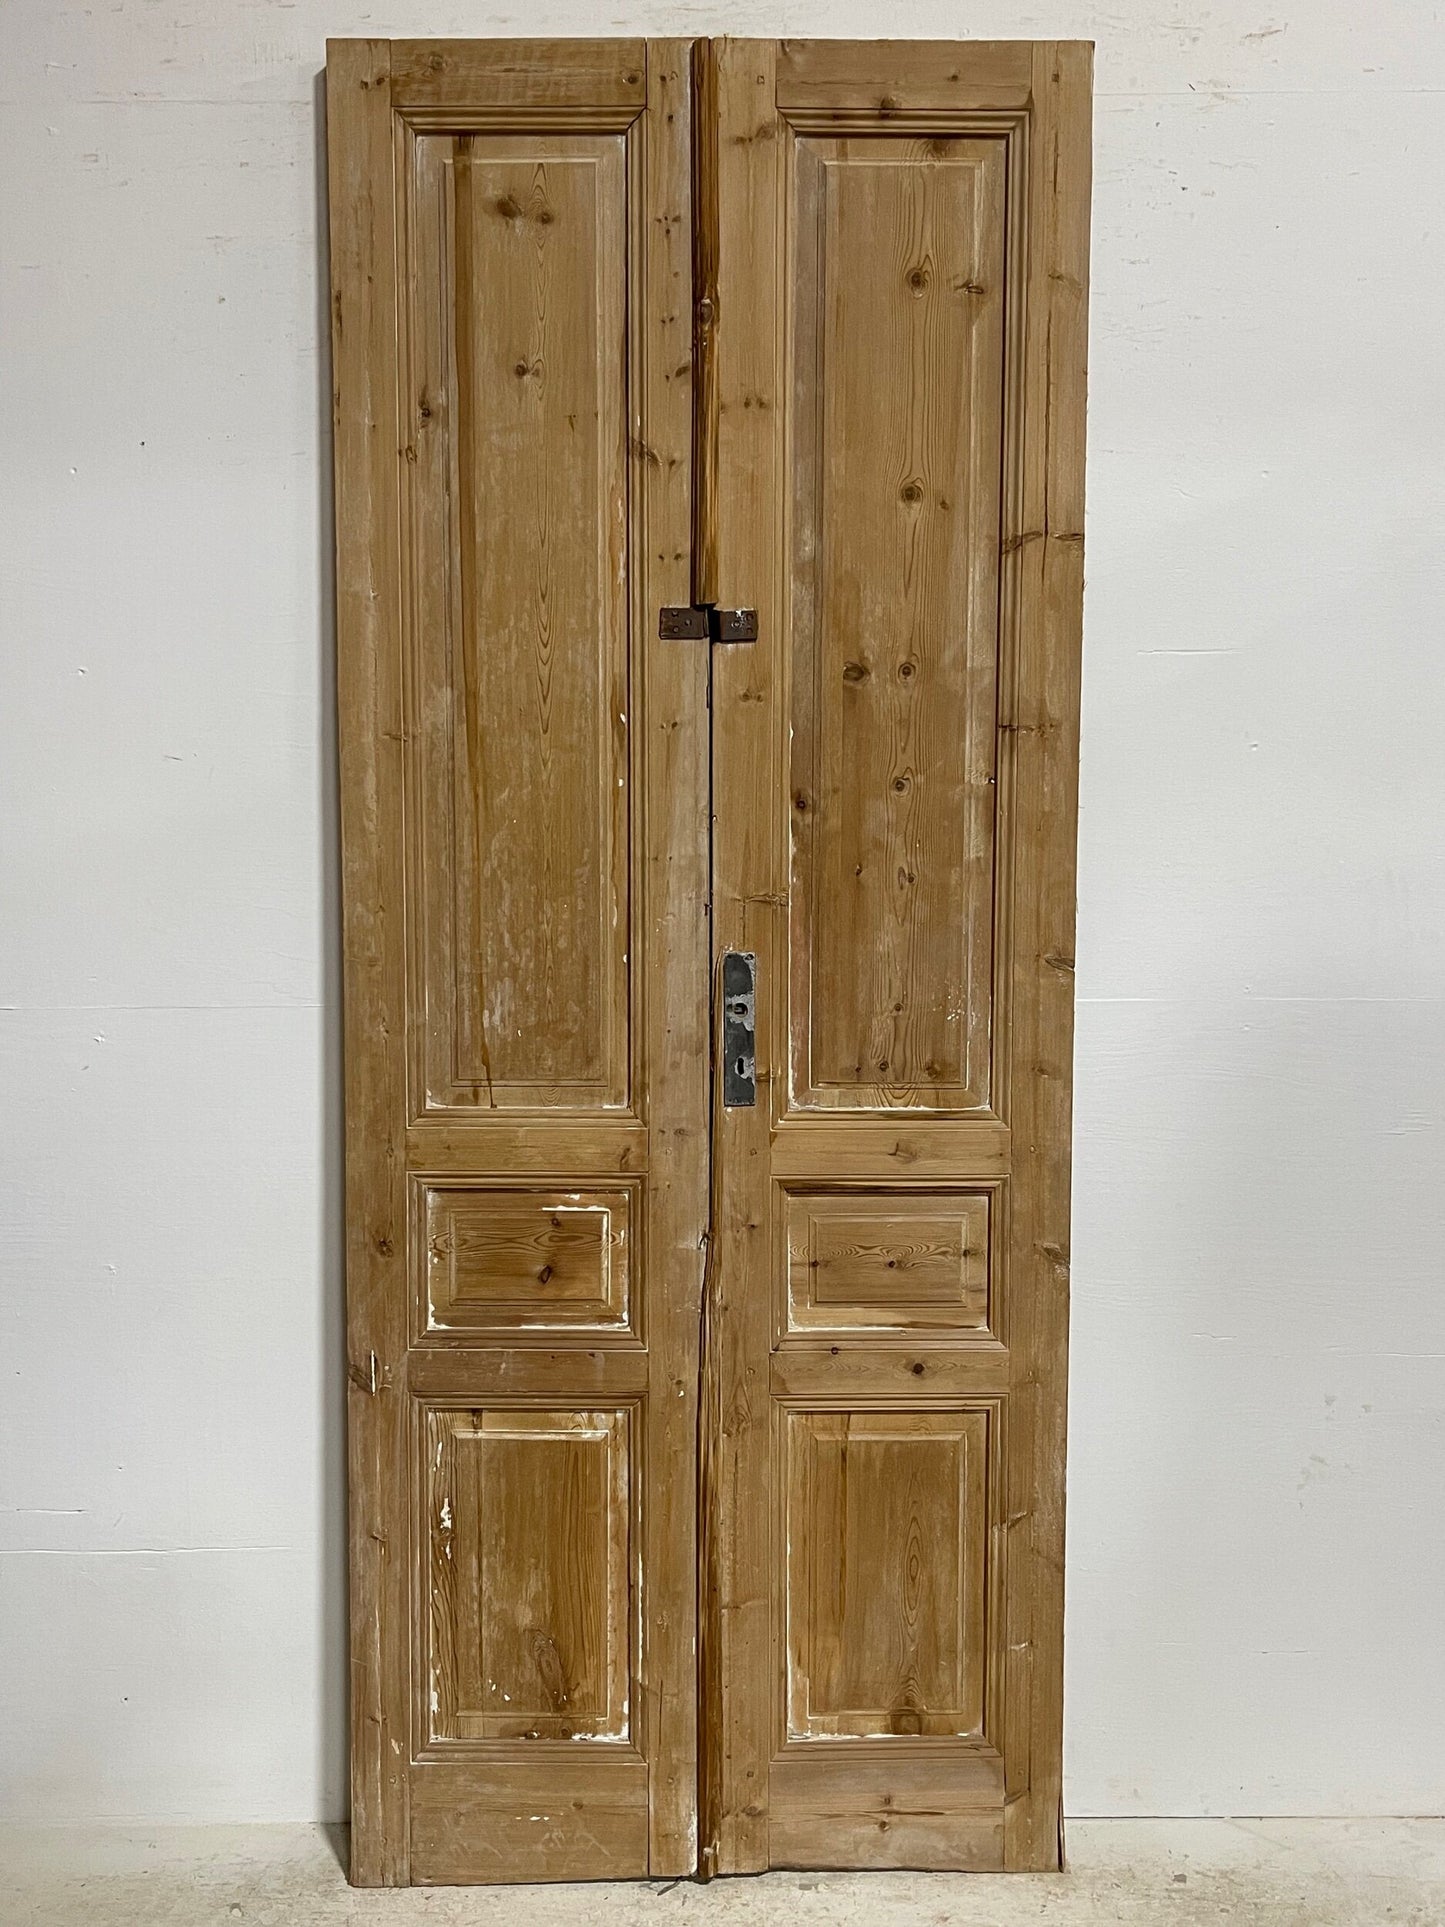 Antique French doors (98x39.5) H0119s